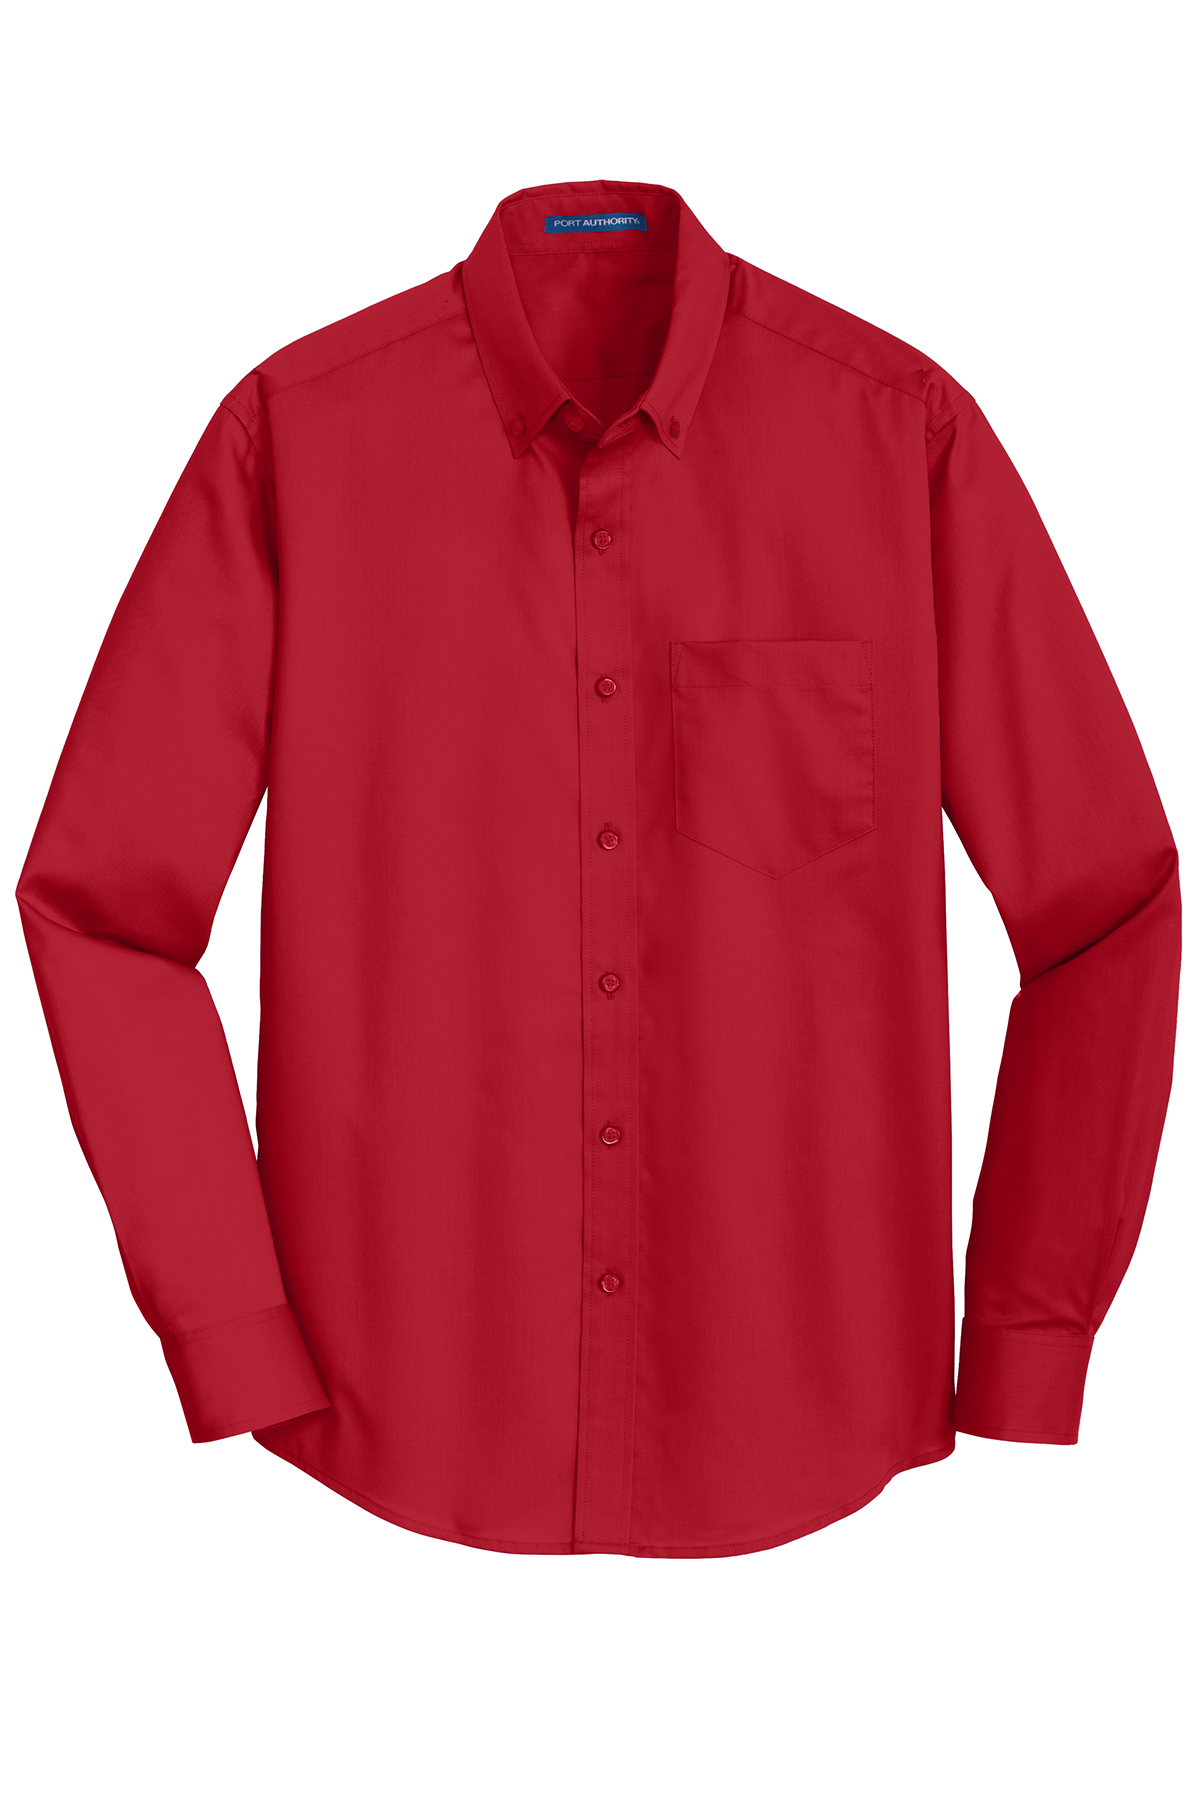 Port Authority SuperPro Twill Shirt | Product | SanMar